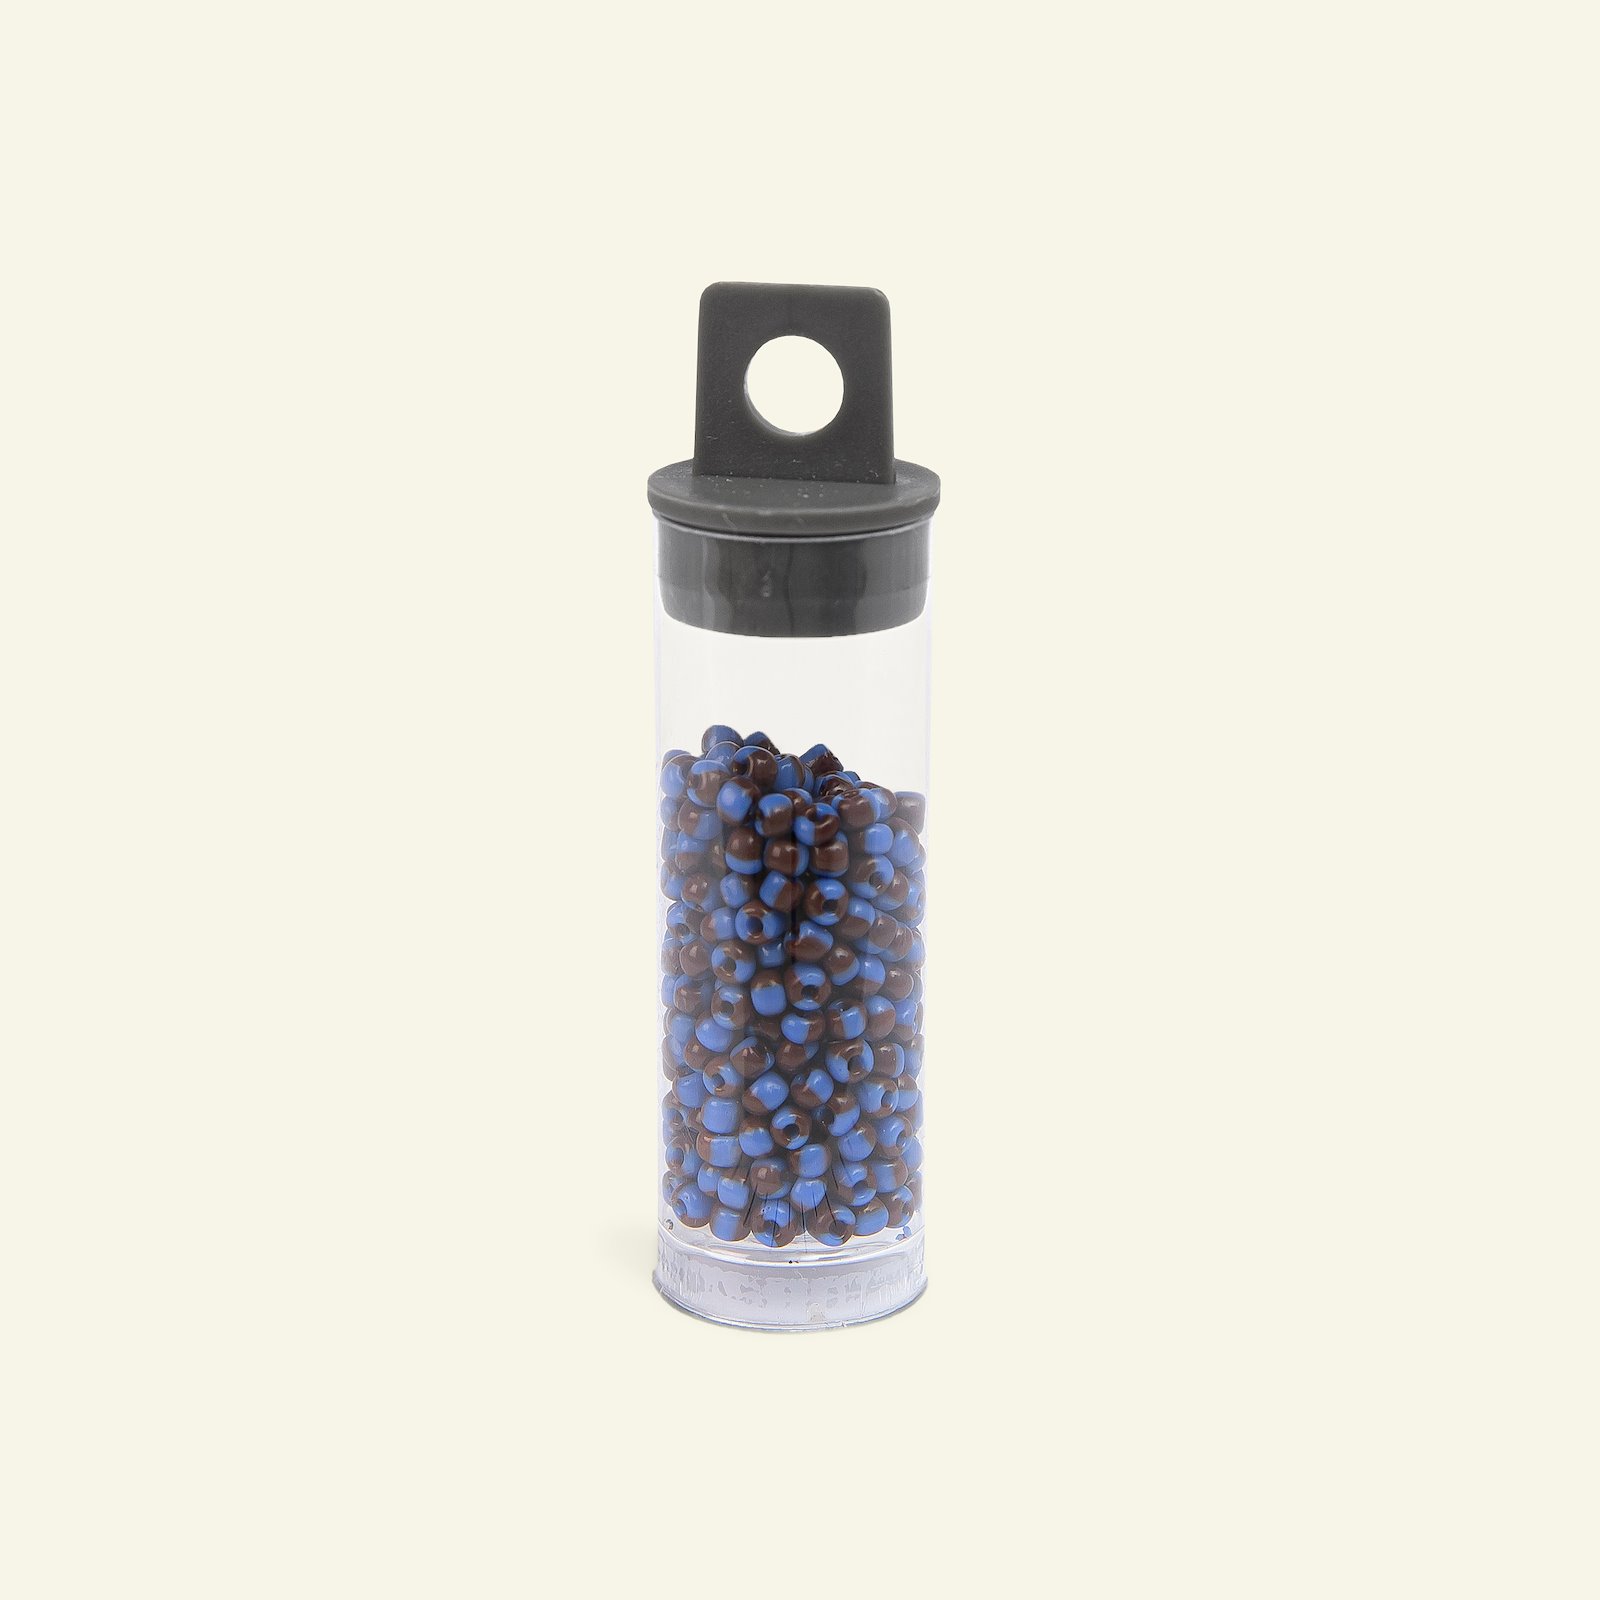 Matsuno glass bead 8/0 blue/brown 10g 47128_pack